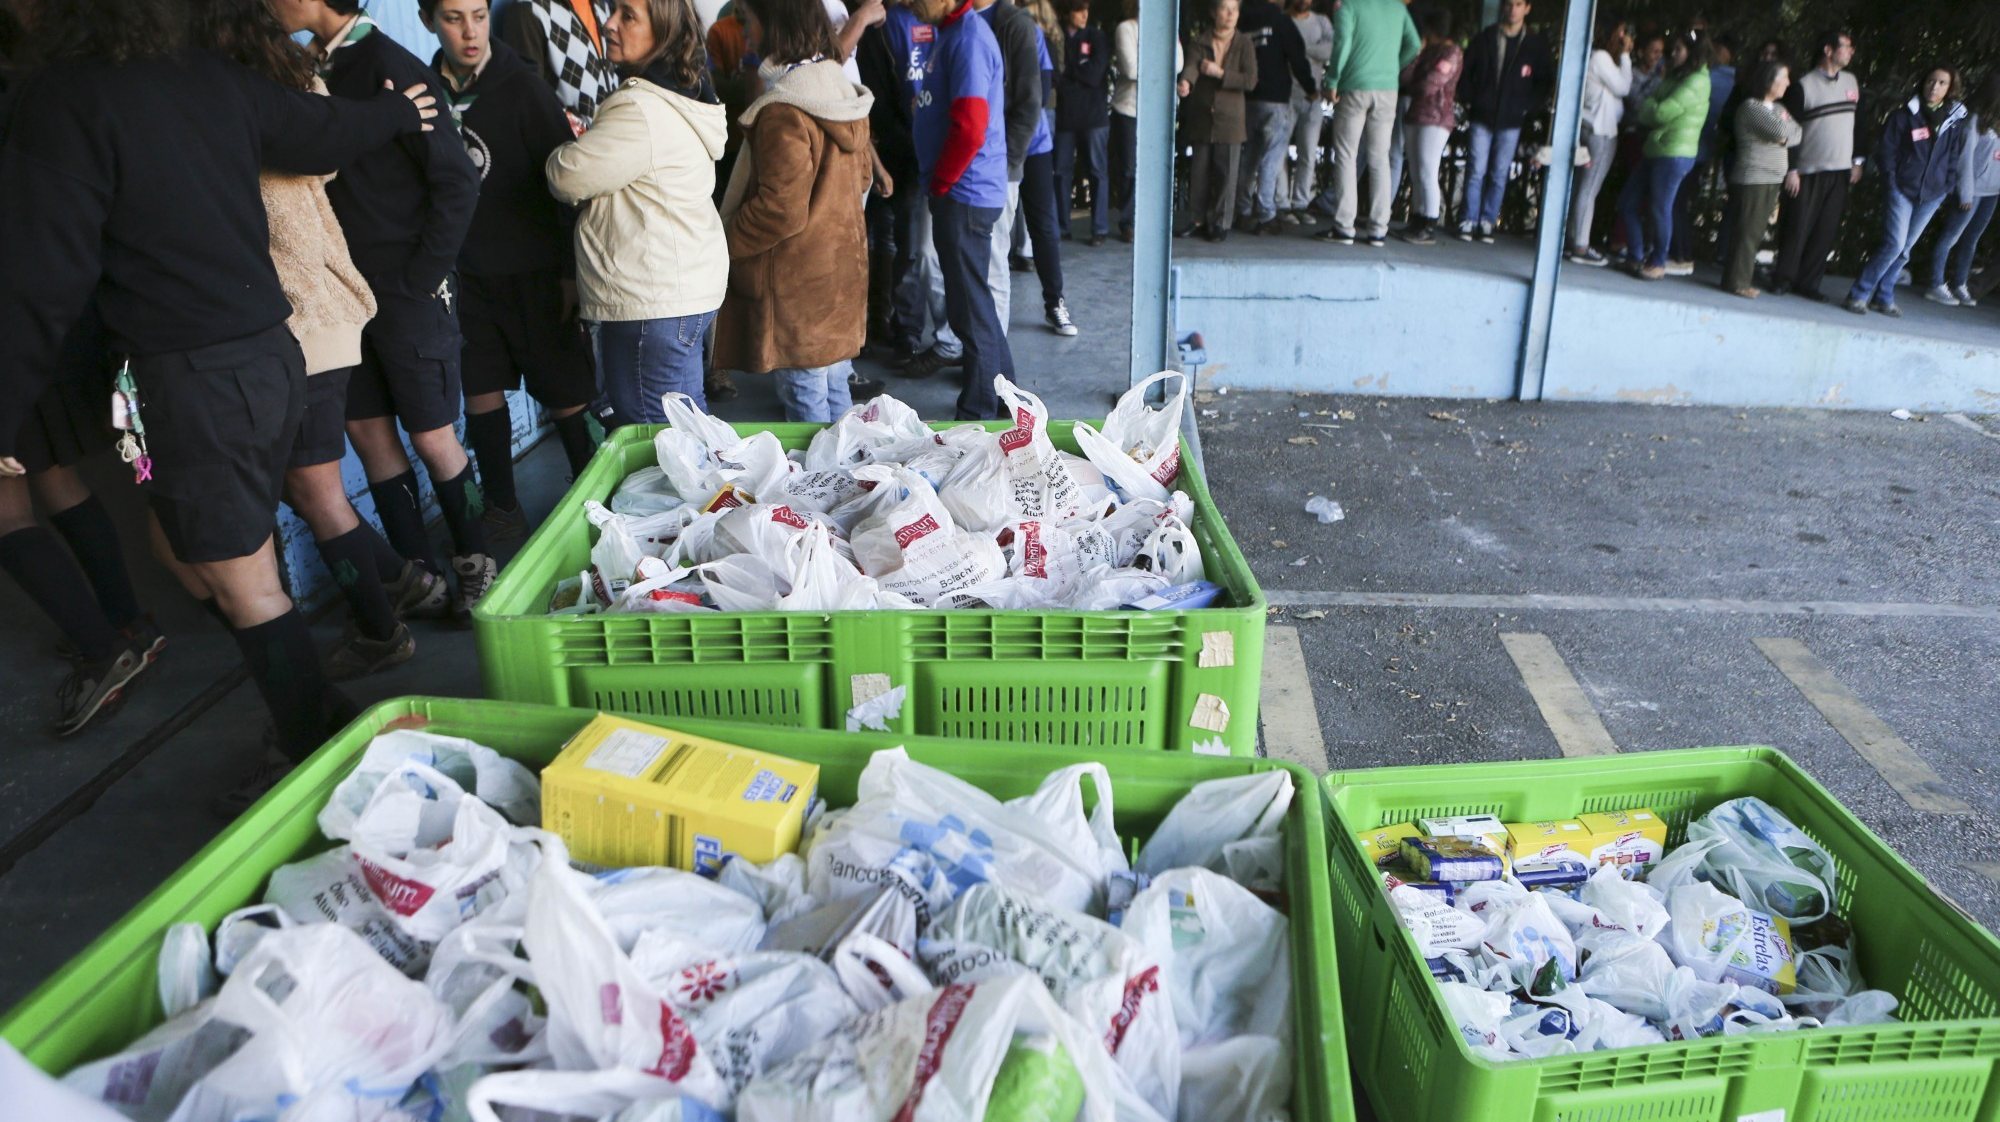 O Banco Alimentar contra a Fome recebeu 514 toneladas de bens alimentares